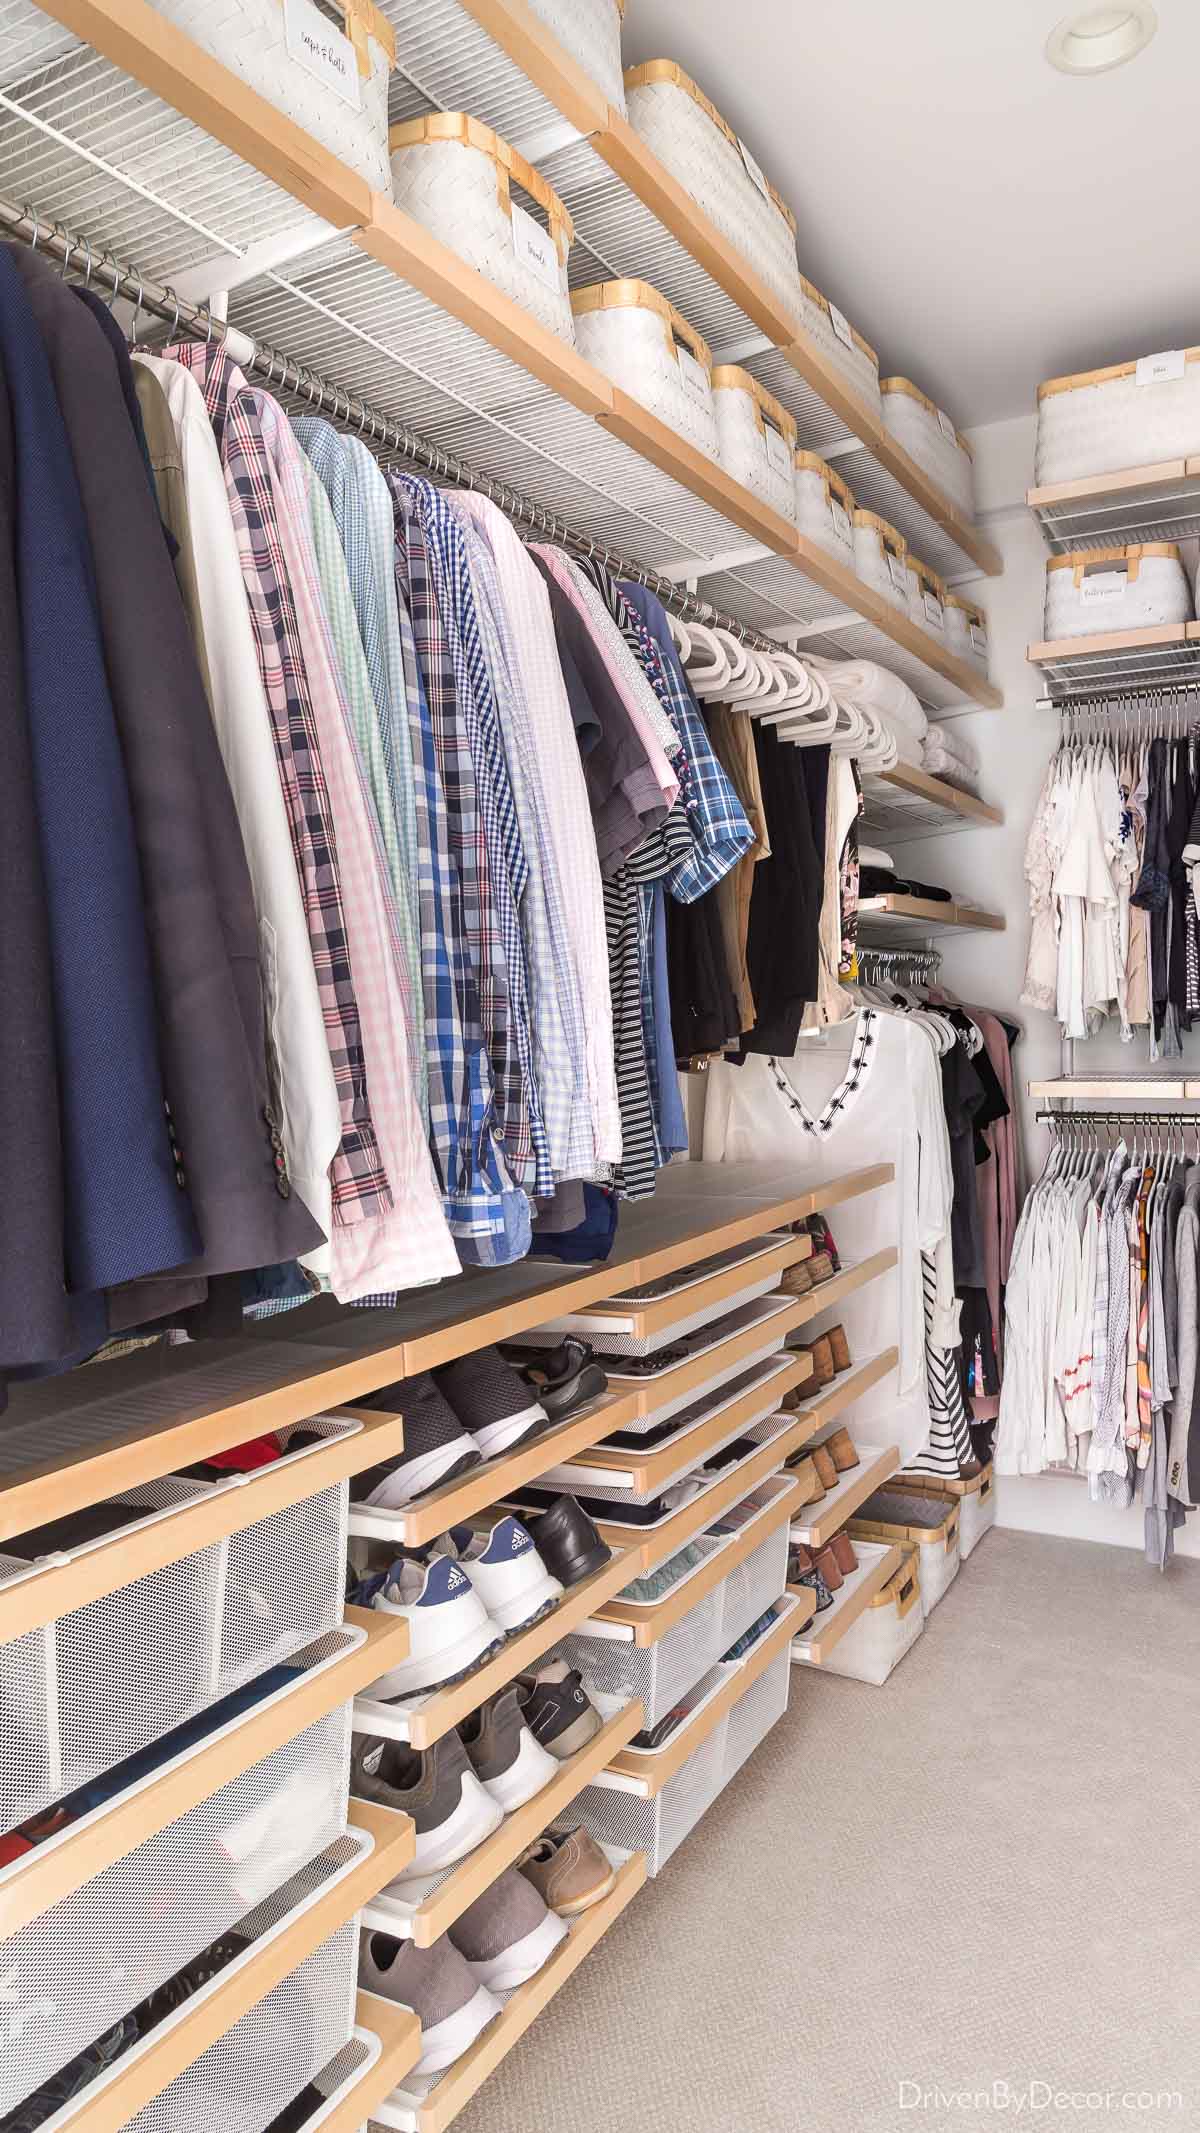 Elfa closet system for walk-in closet organization